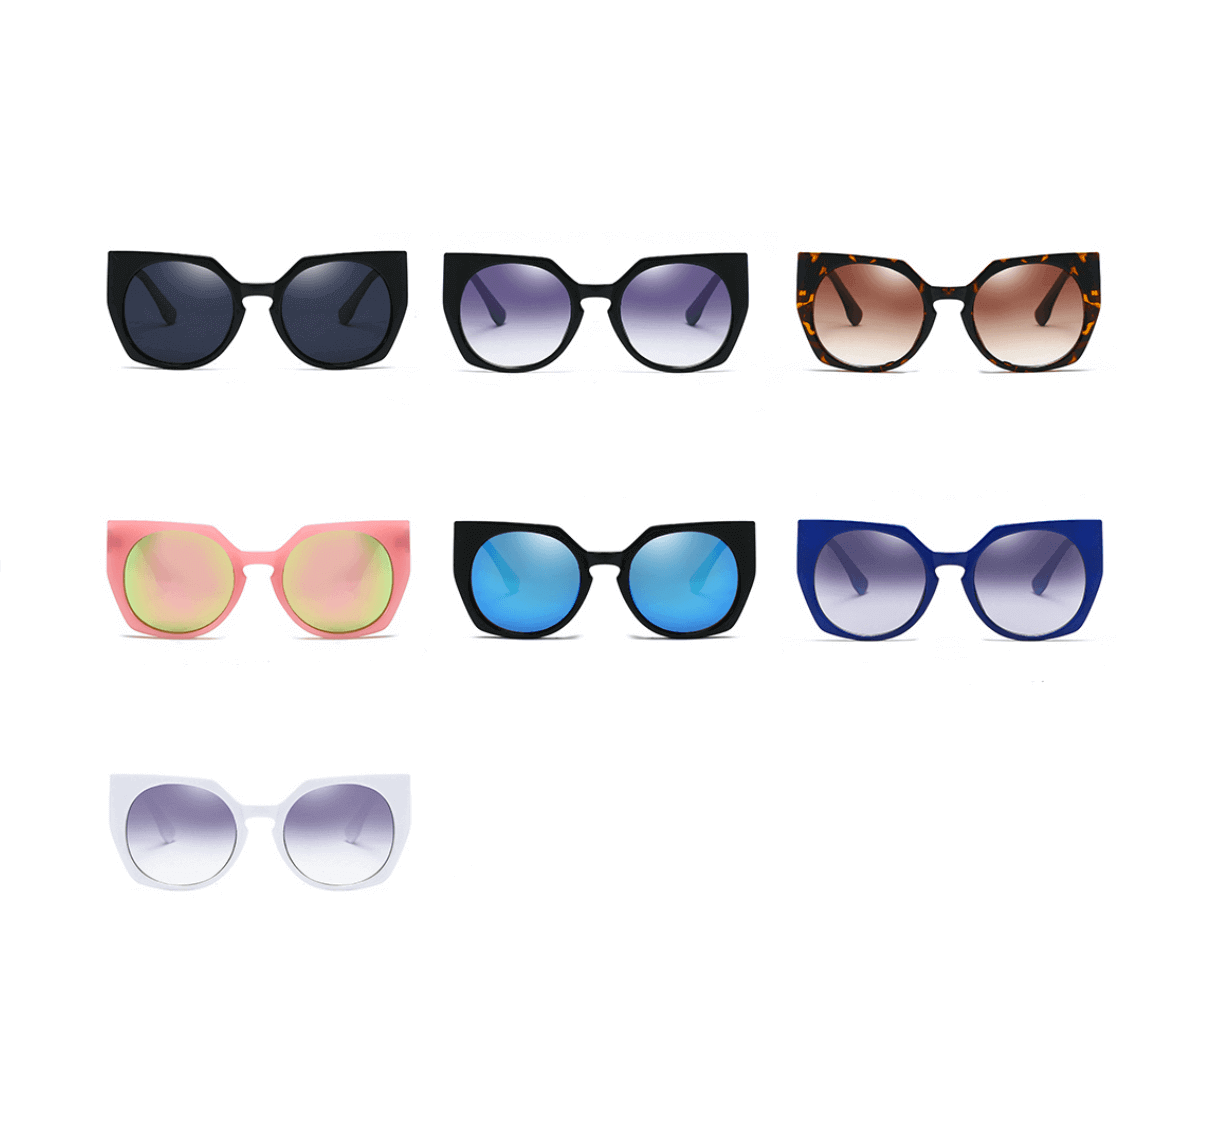 wholesale plastic sunglasses, plastic sunglasses in bulk, plastic sunglasses manufacturers, wholesale sunglasses manufacturer